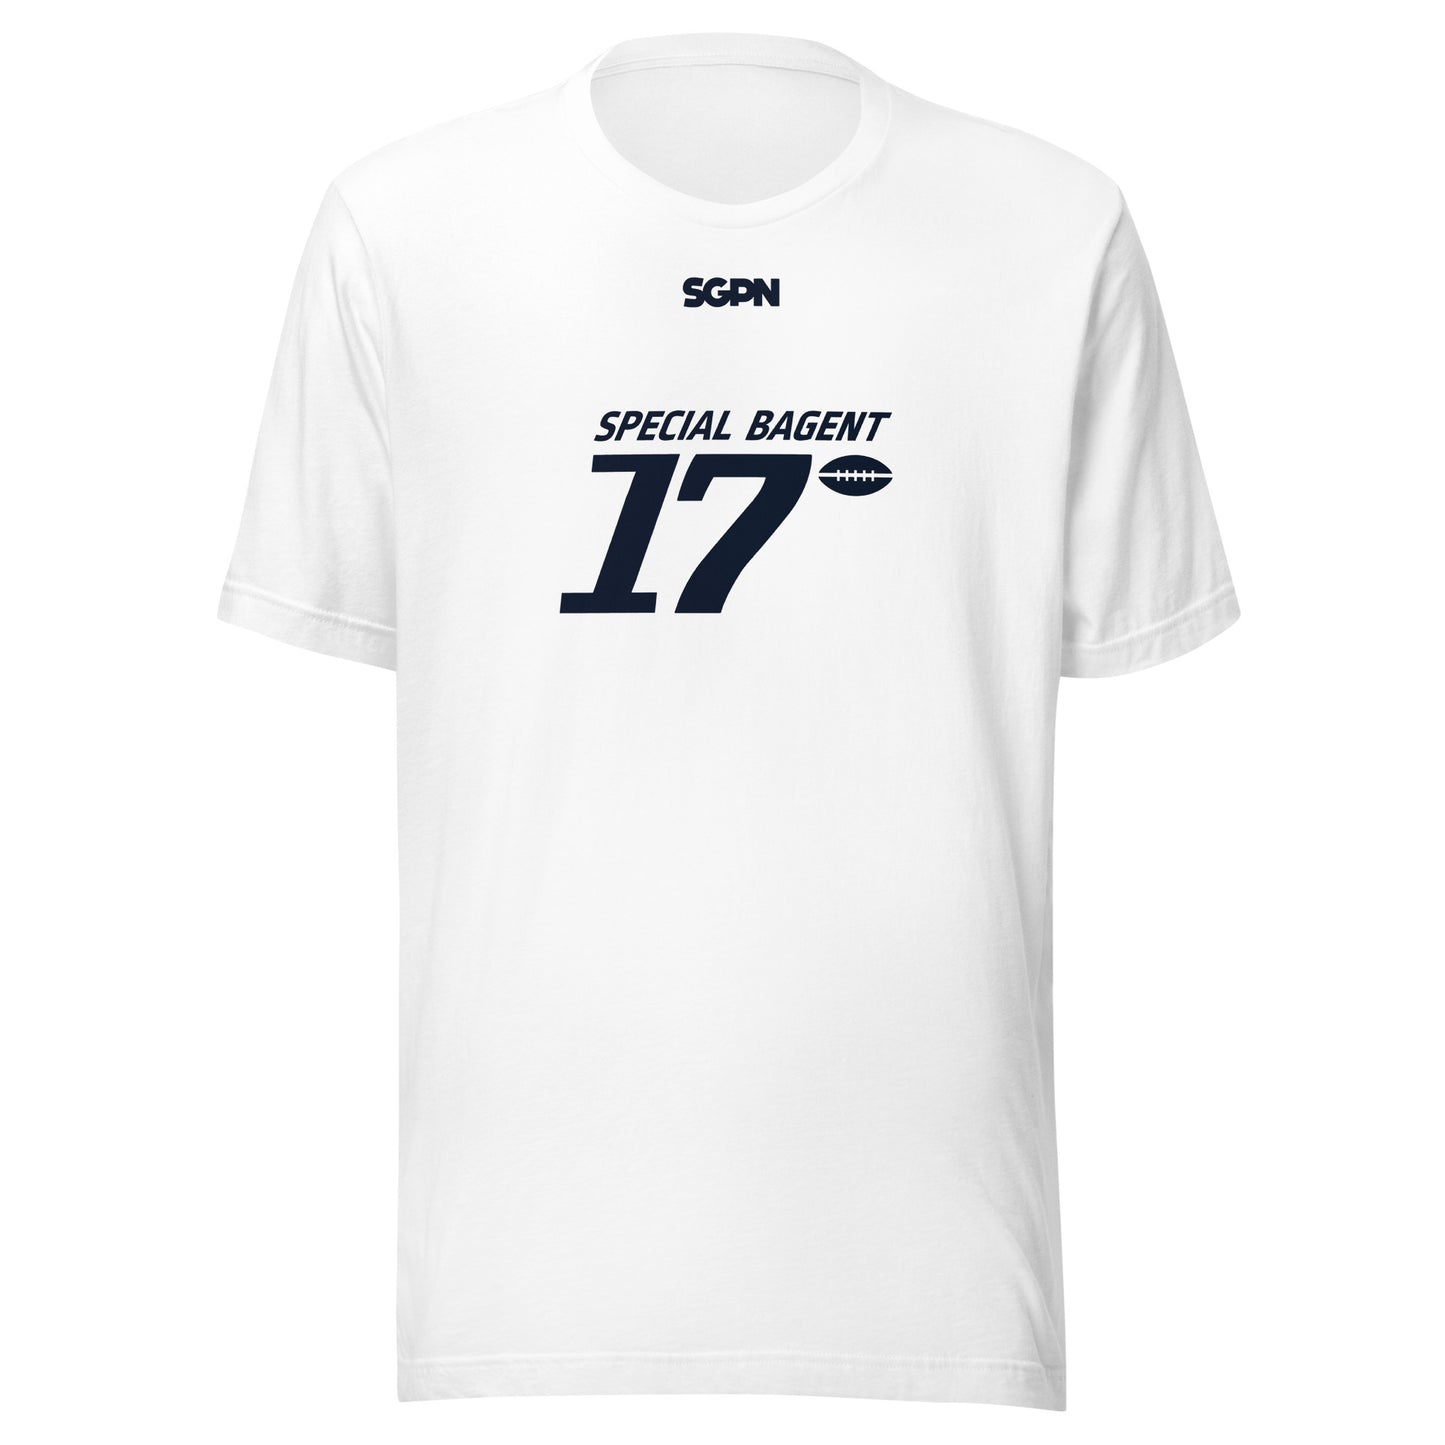 Special Bagent 17 - Unisex t-shirt